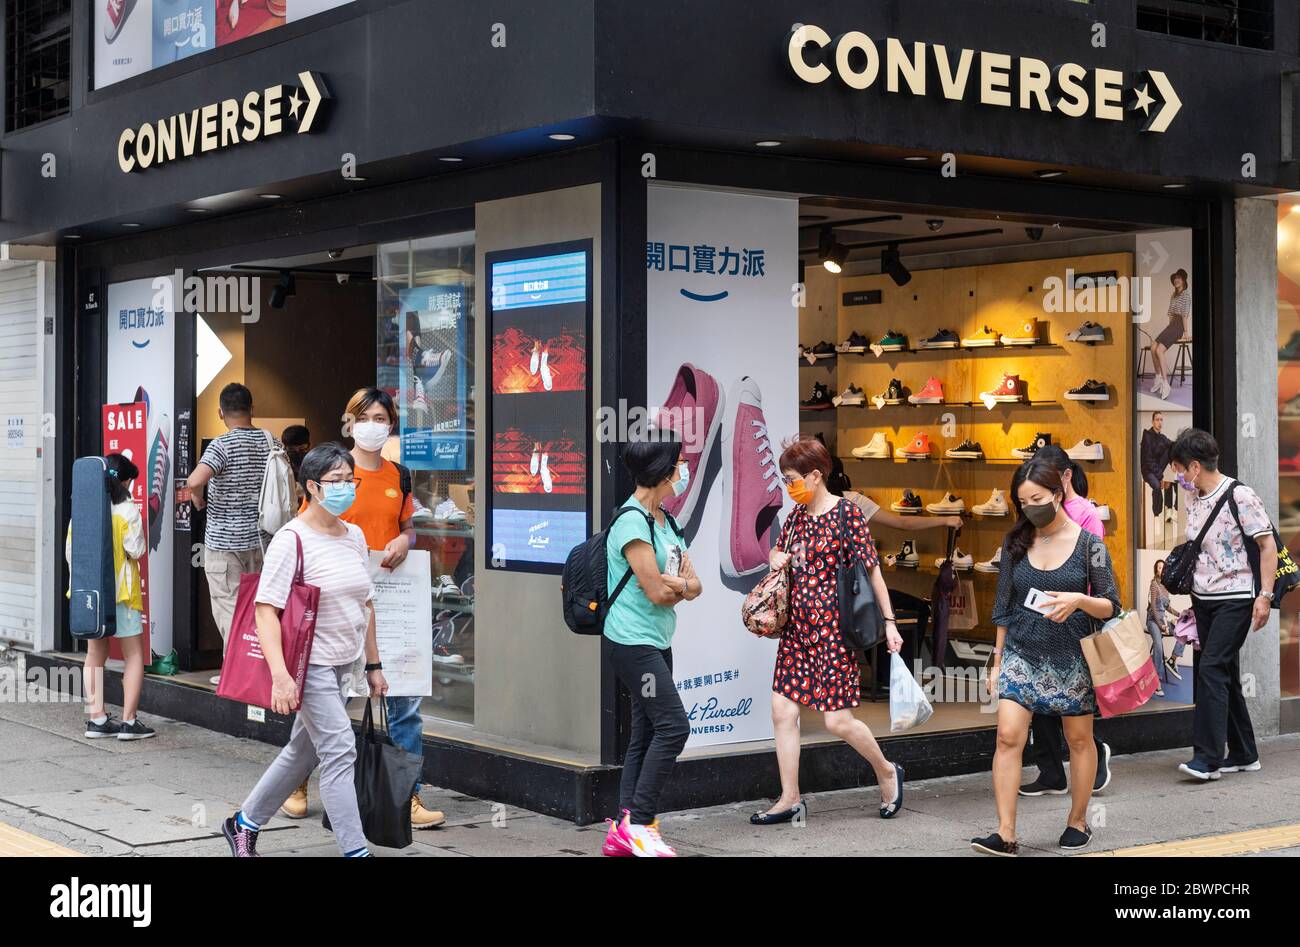 American shoe brand company Converse 